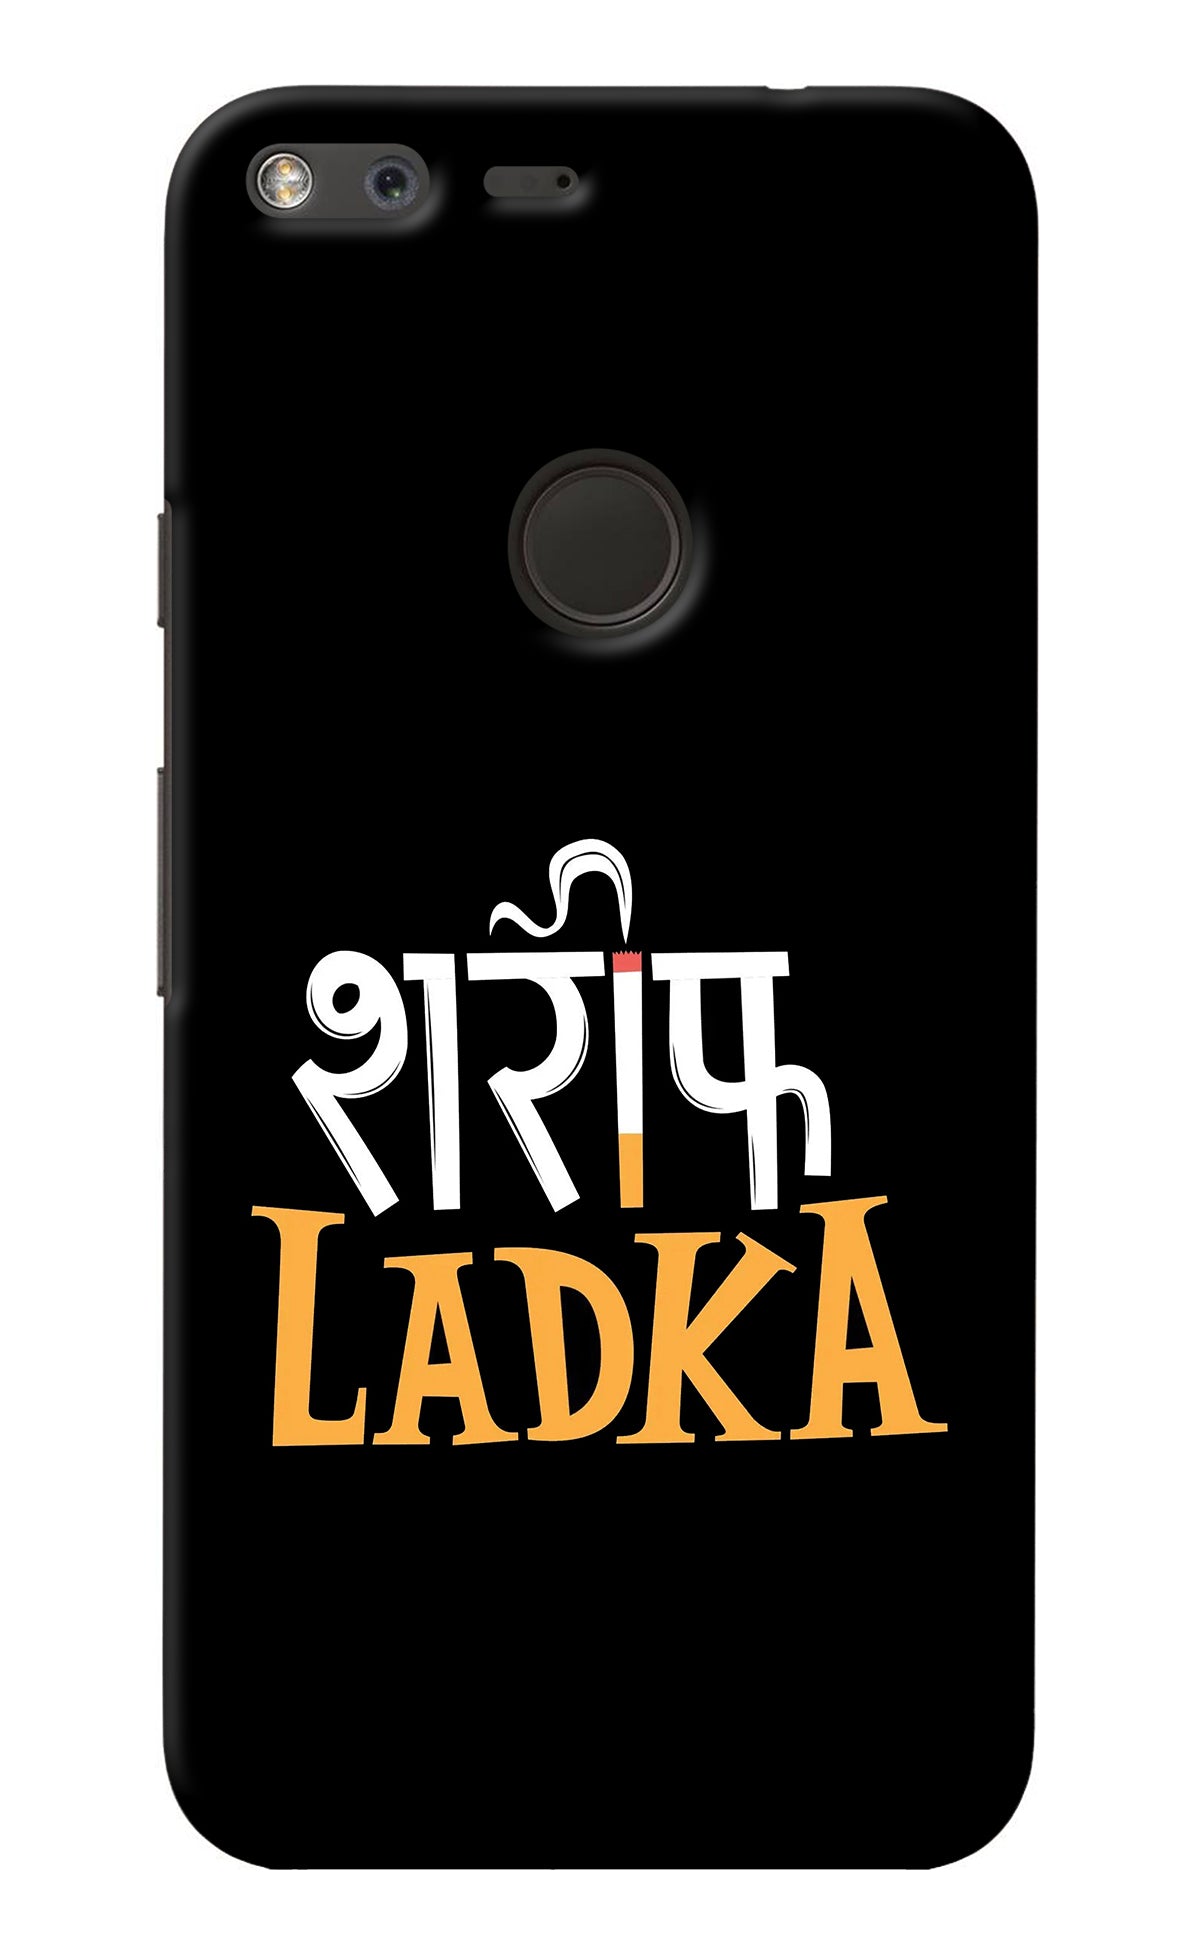 Shareef Ladka Google Pixel XL Back Cover